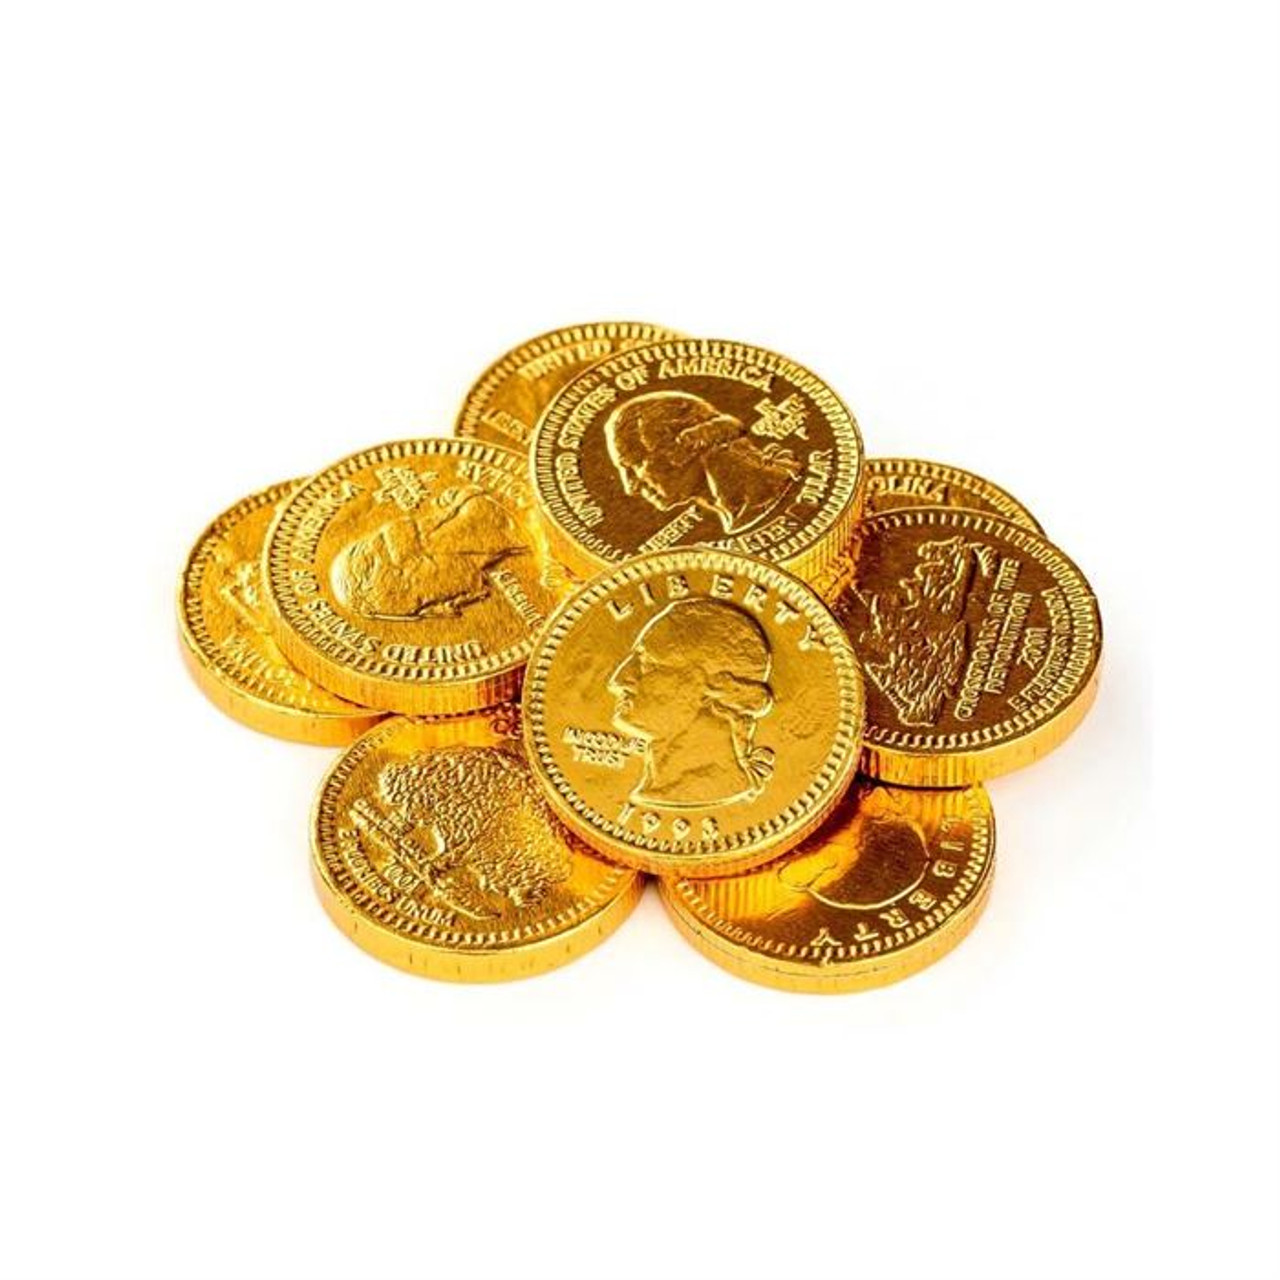 FORT KNOX Gold Coins - Half Dollar - 1 lb